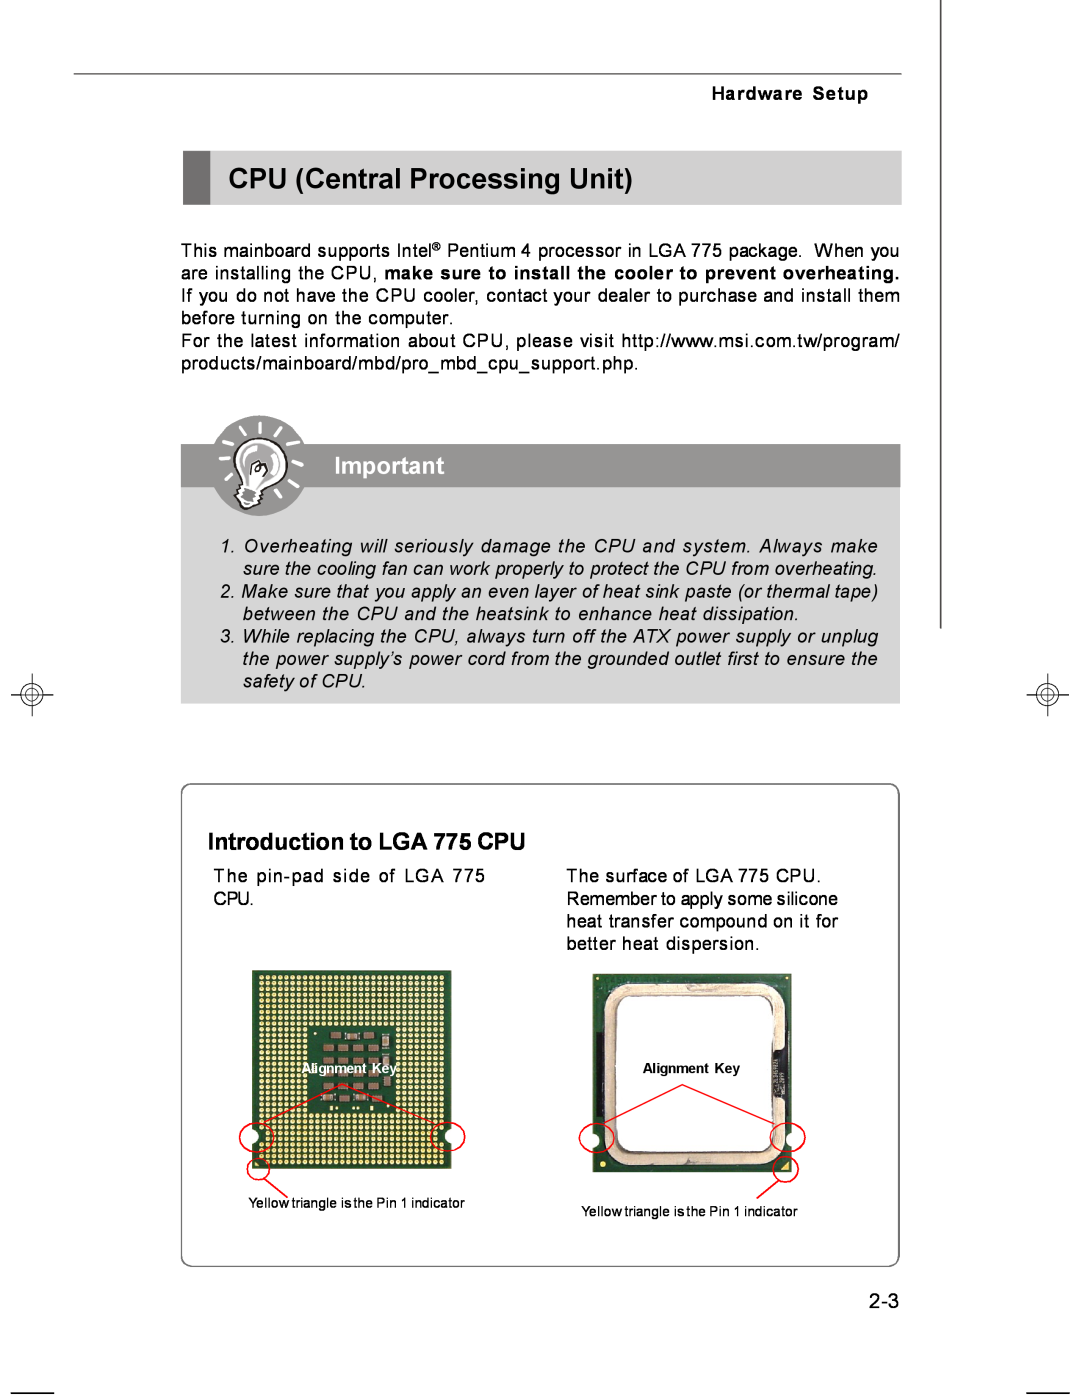 MSI MS-7255 manual CPU Central Processing Unit, Introduction to LGA 775 CPU, Hardware Setup 